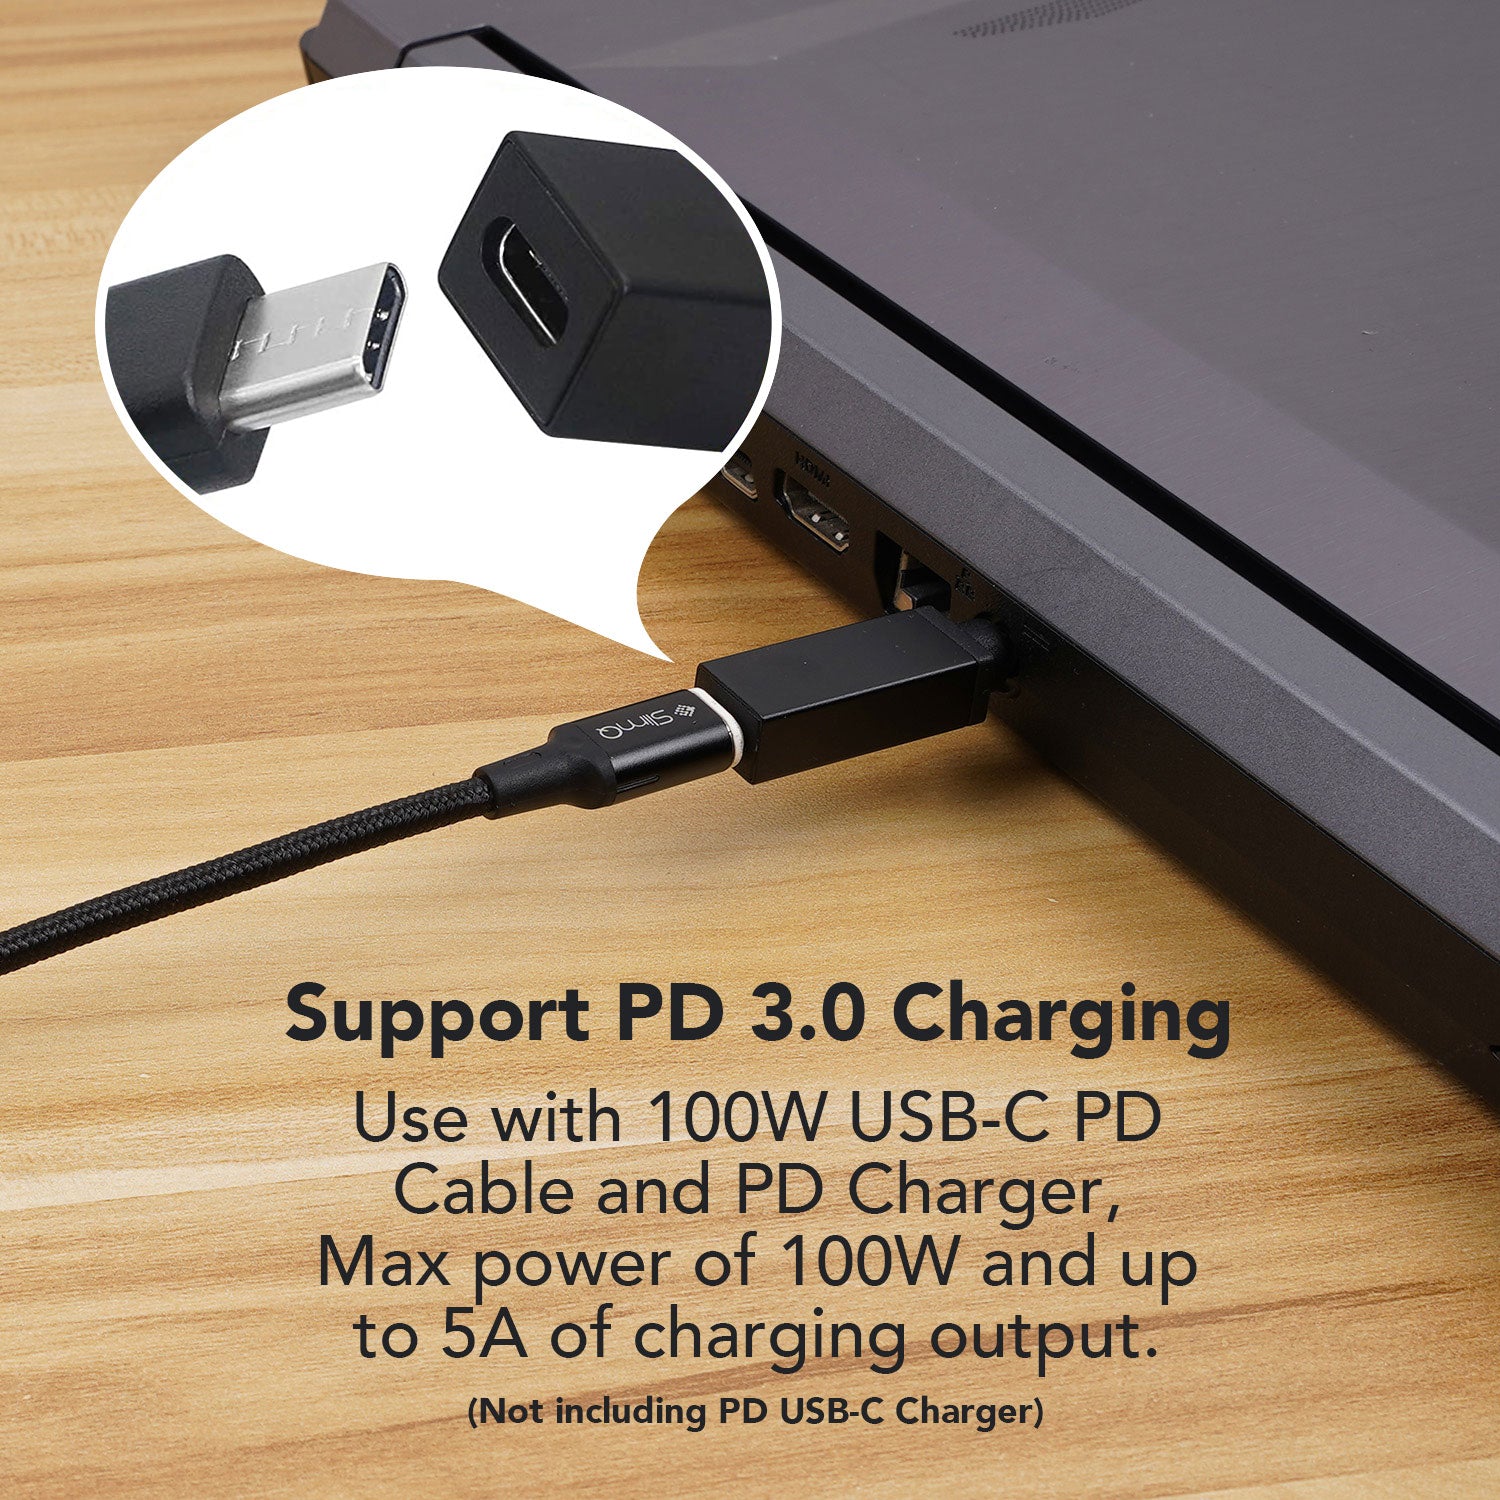 USB-C - DC アダプター チップ A 5.5x2.5mm